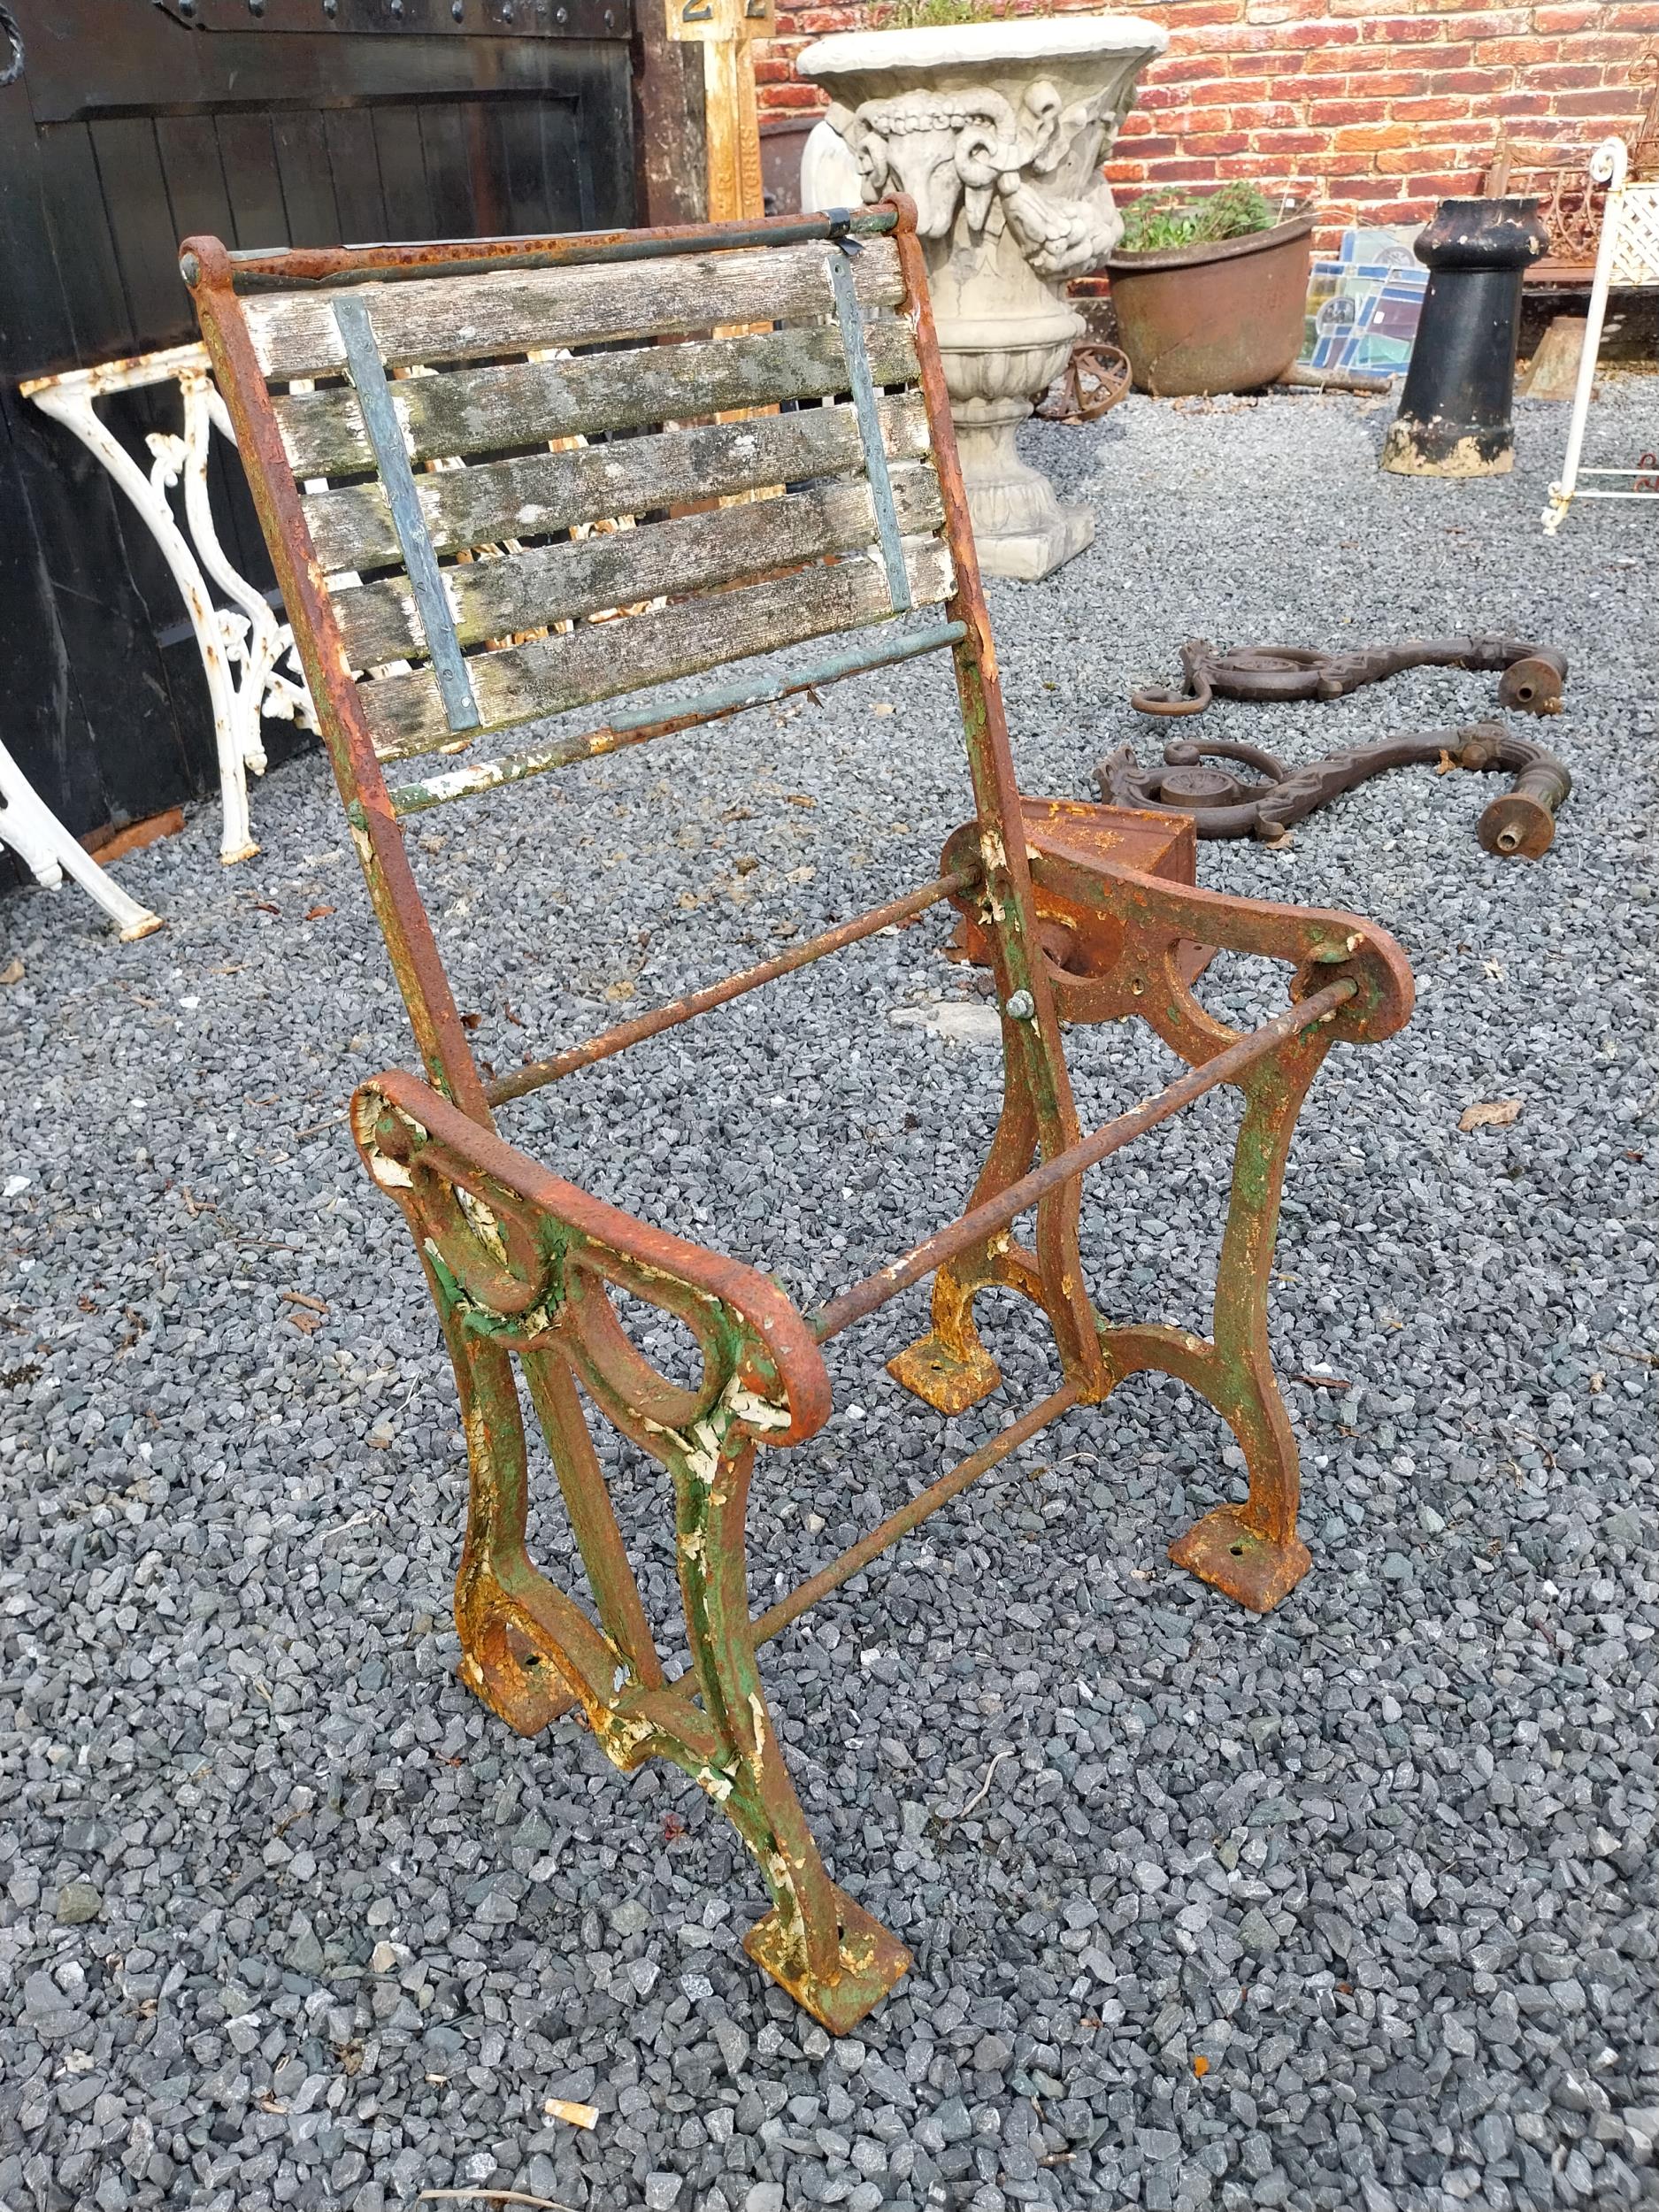 19th C. cast iron garden chair - in need of restoration {84 cm H x 50 cm W x 44 cm D}.